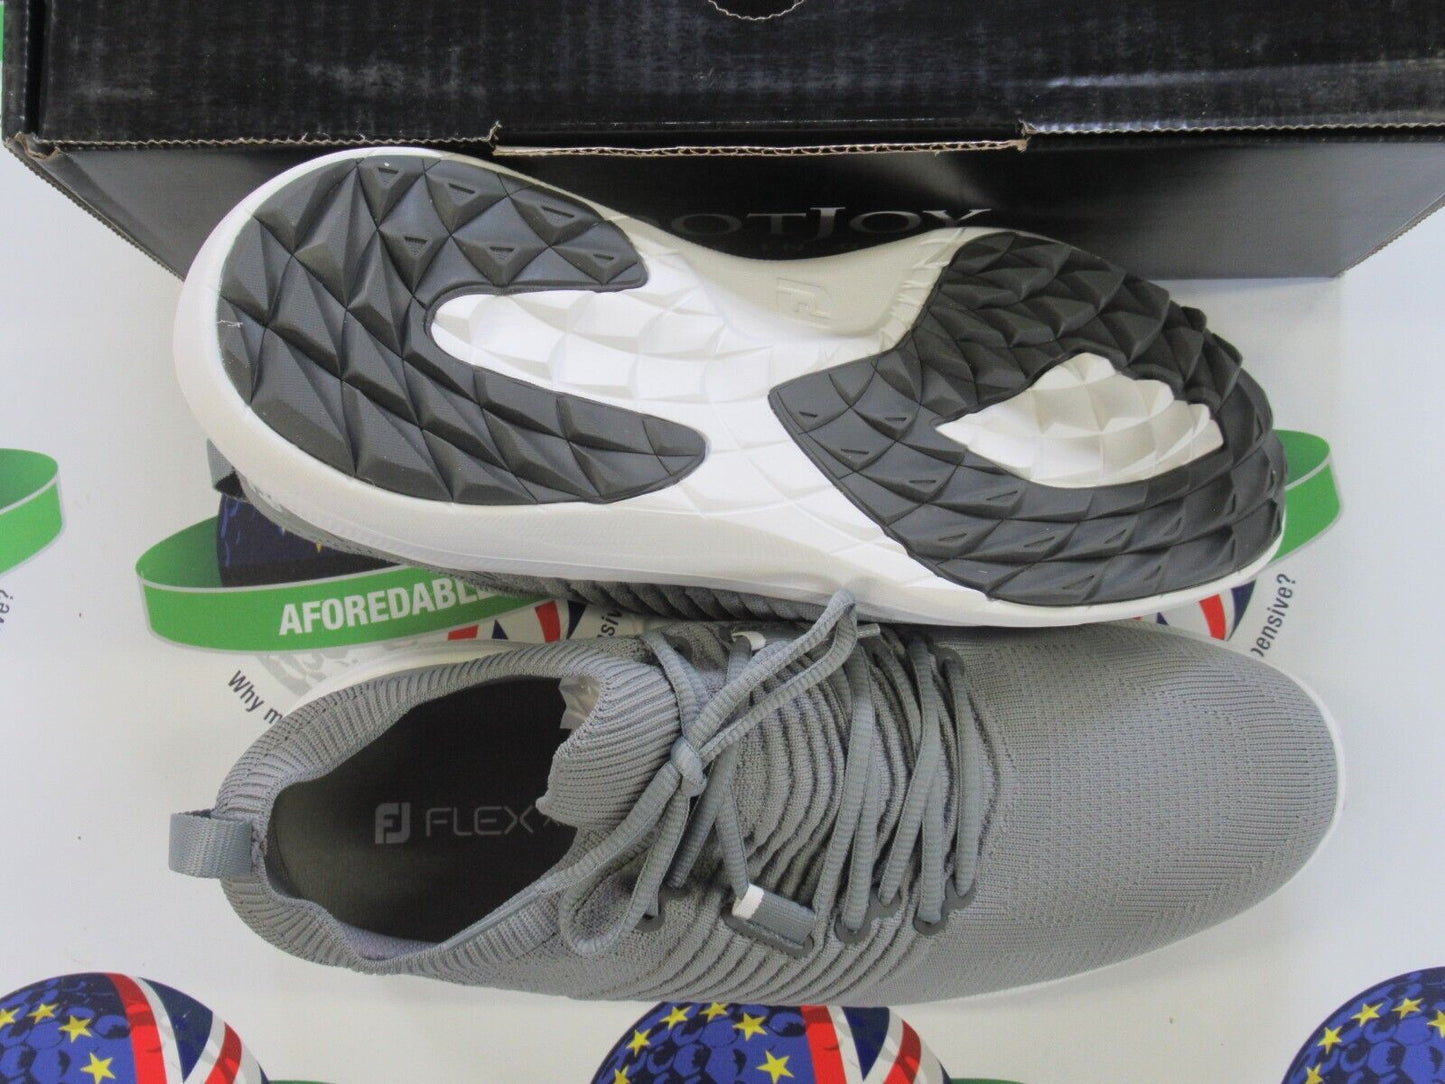 footjoy flex xp golf shoes 56273k grey/white uk size 8.5 medium